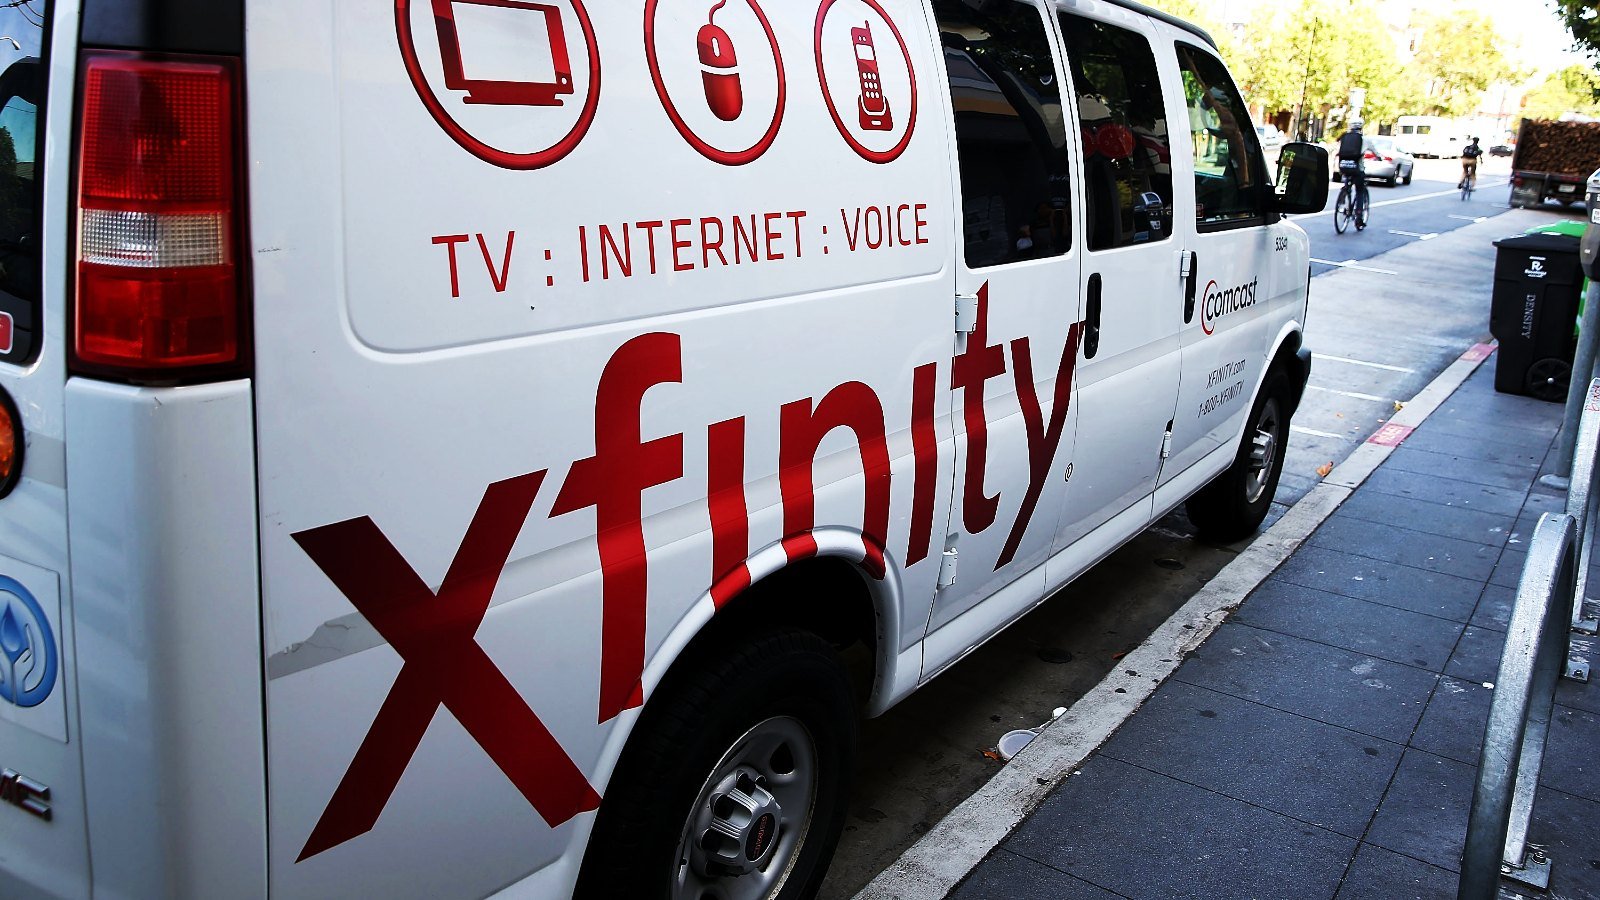 Xfinity discloses data breach after recent Citrix server hack